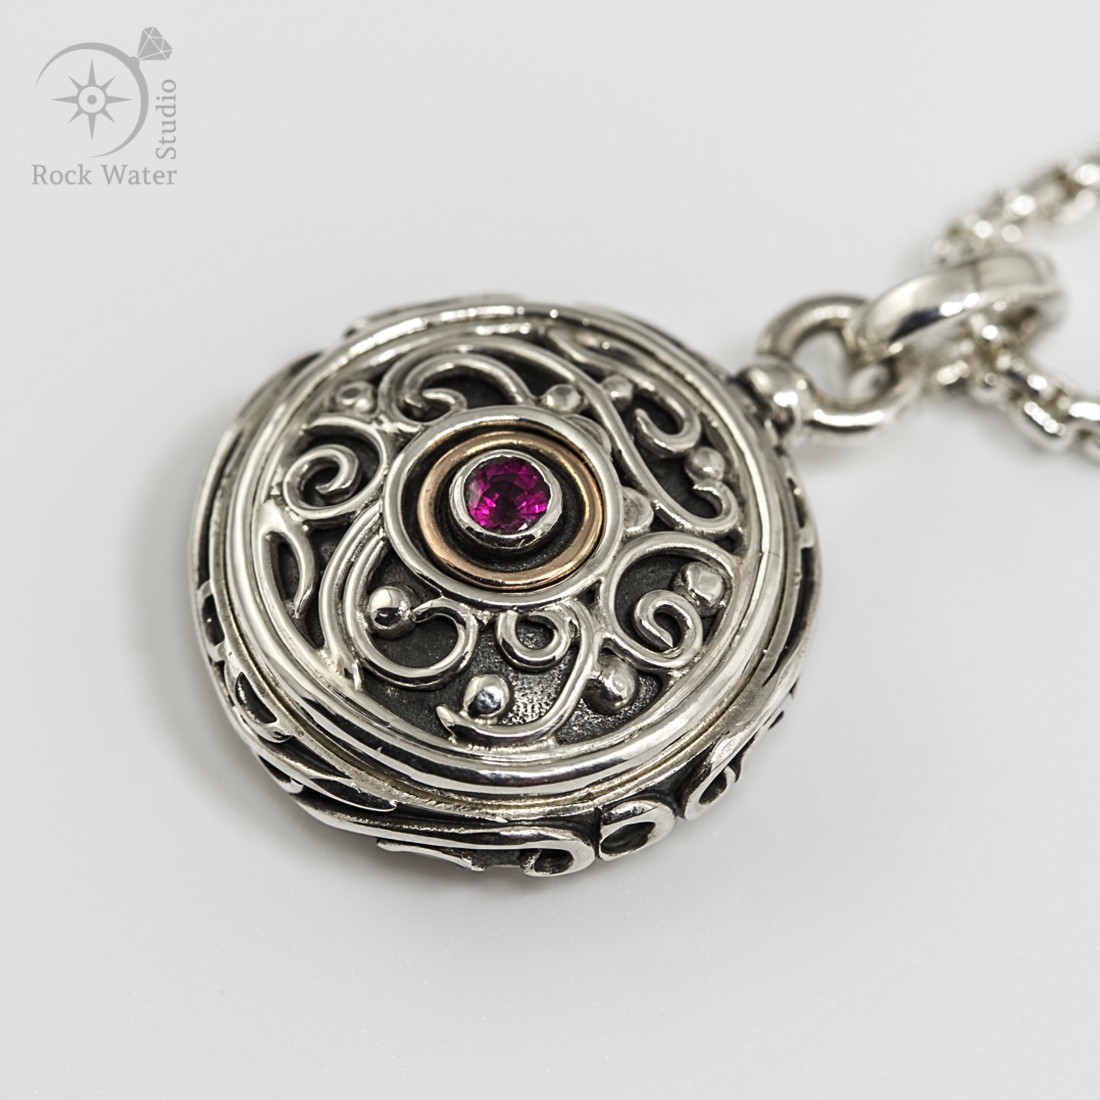 Sapphire Compass Locket Pendant Necklace